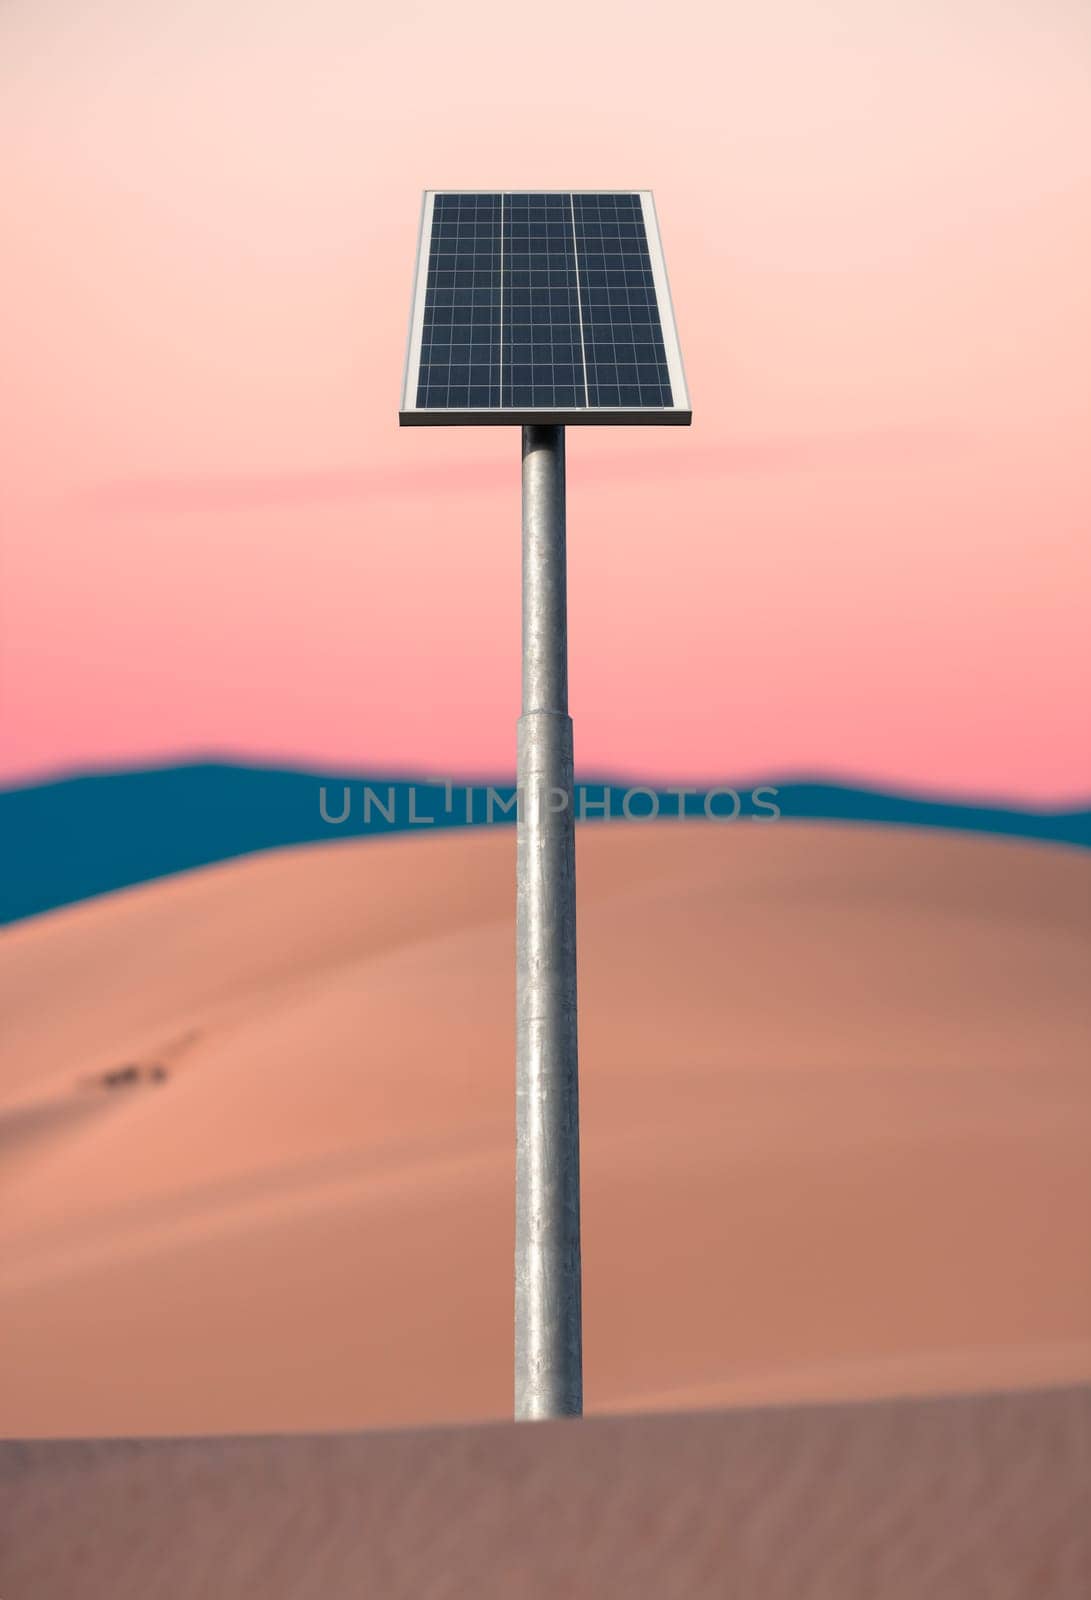 Solar Panel In A Desert by mrdoomits